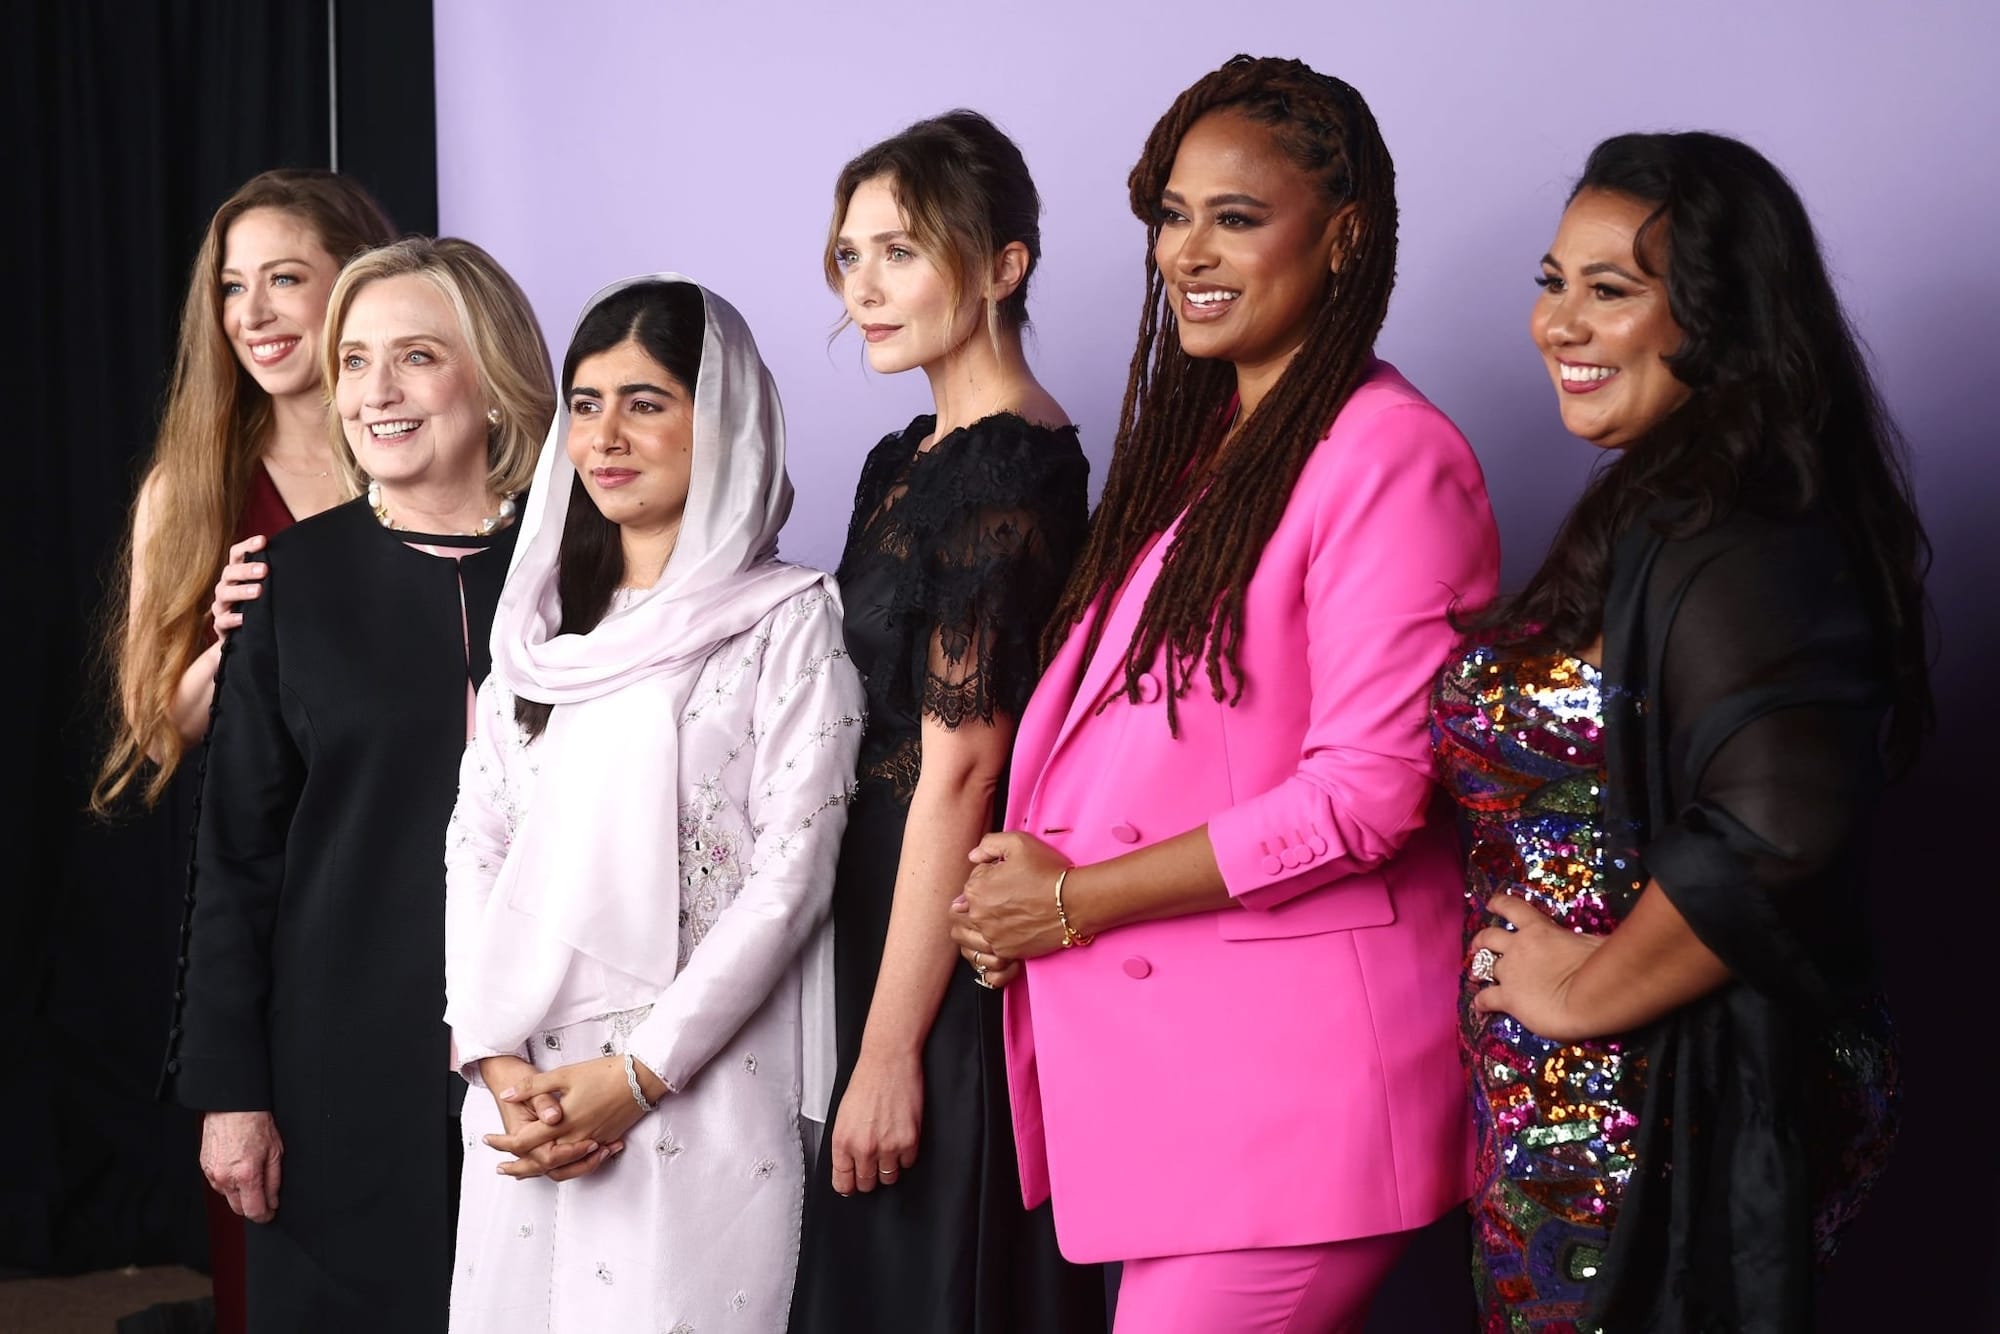 Chelsea Clinton, Hillary Clinton, Malala Yousafzai, Elizabeth Olsen, Ava DuVernay, and Jacqueline Martinez Garcel at Variety 2022 Power of Women Event.